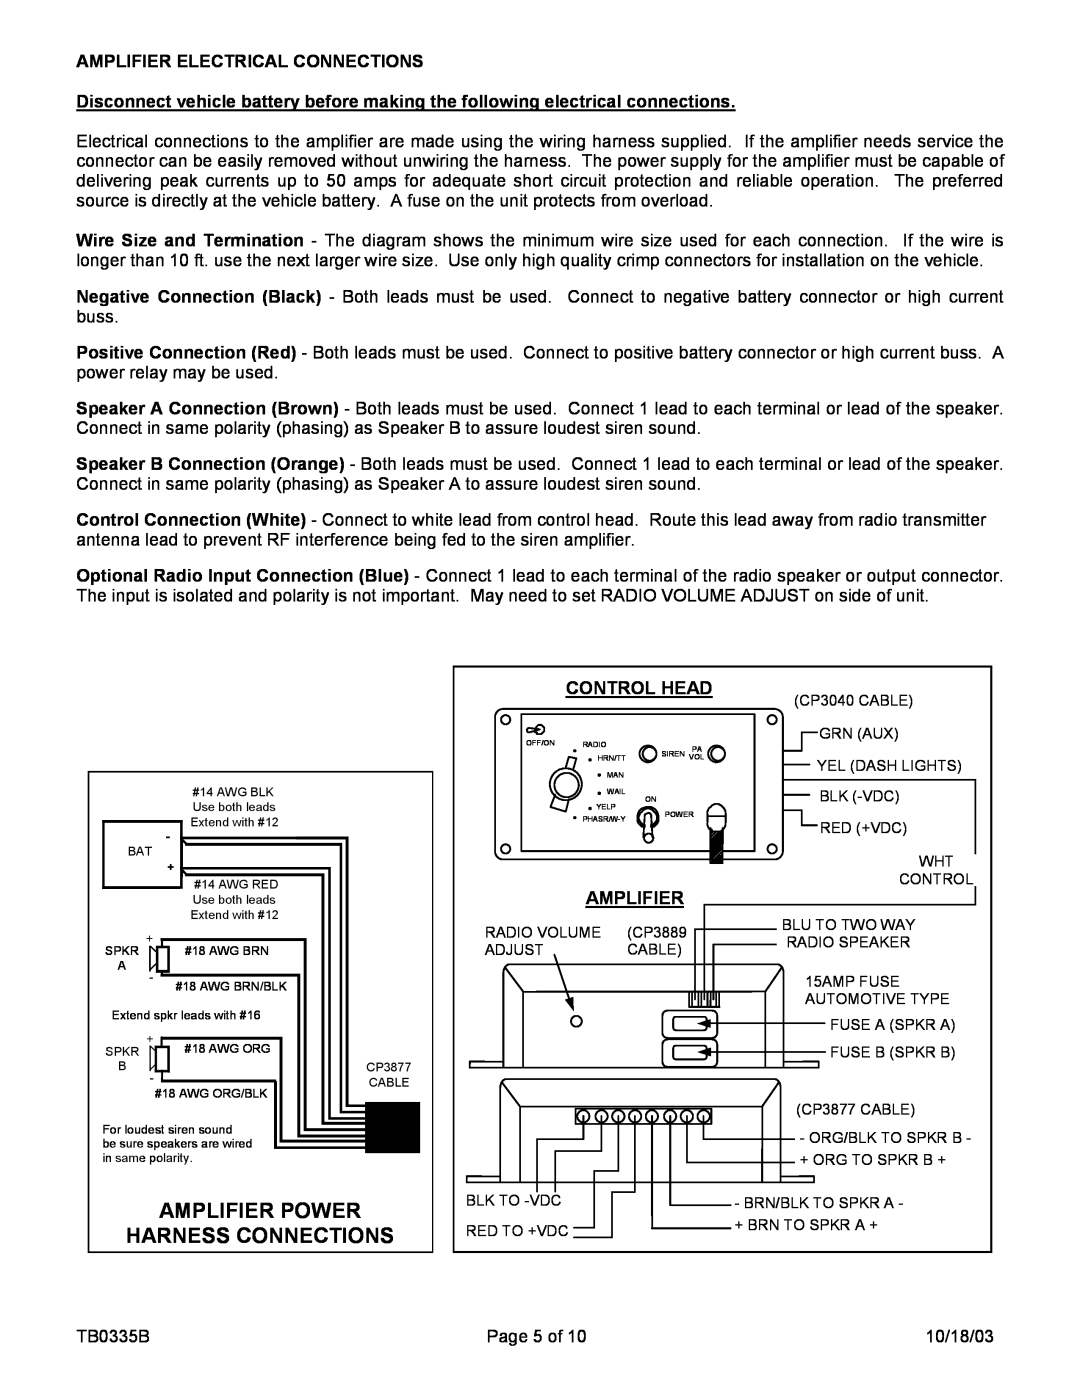 Carson SA-441-83F X, SA-441-83FX manual Amplifier Power Harness Connections, Control Head 